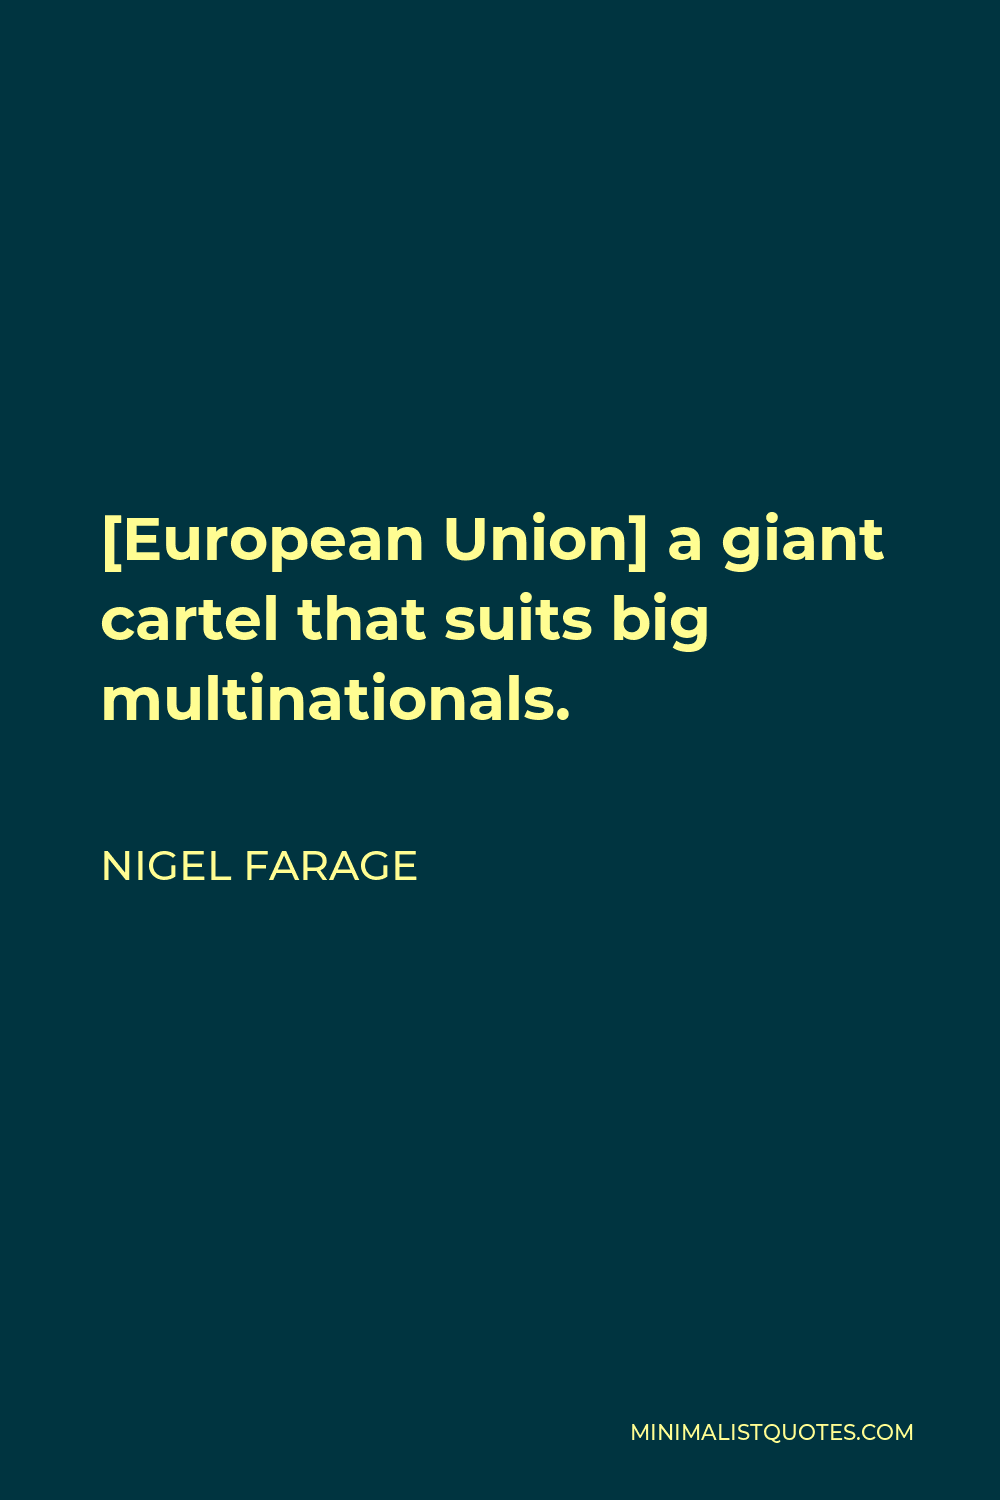 Nigel Farage Quote - [European Union] a giant cartel that suits big multinationals.